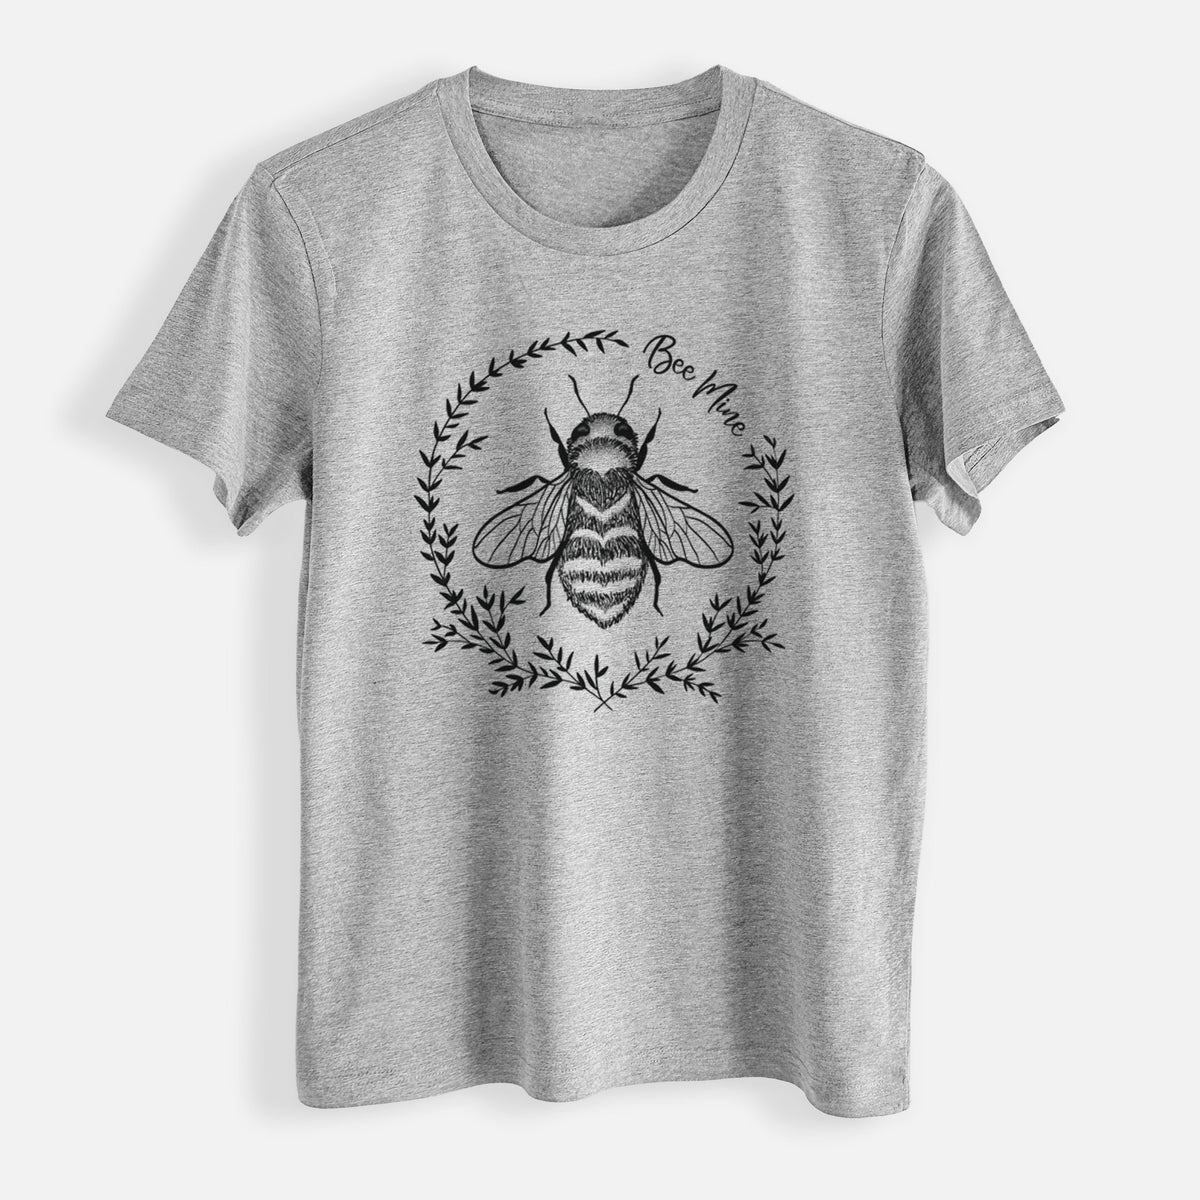 Bee Mine - Womens Everyday Maple Tee